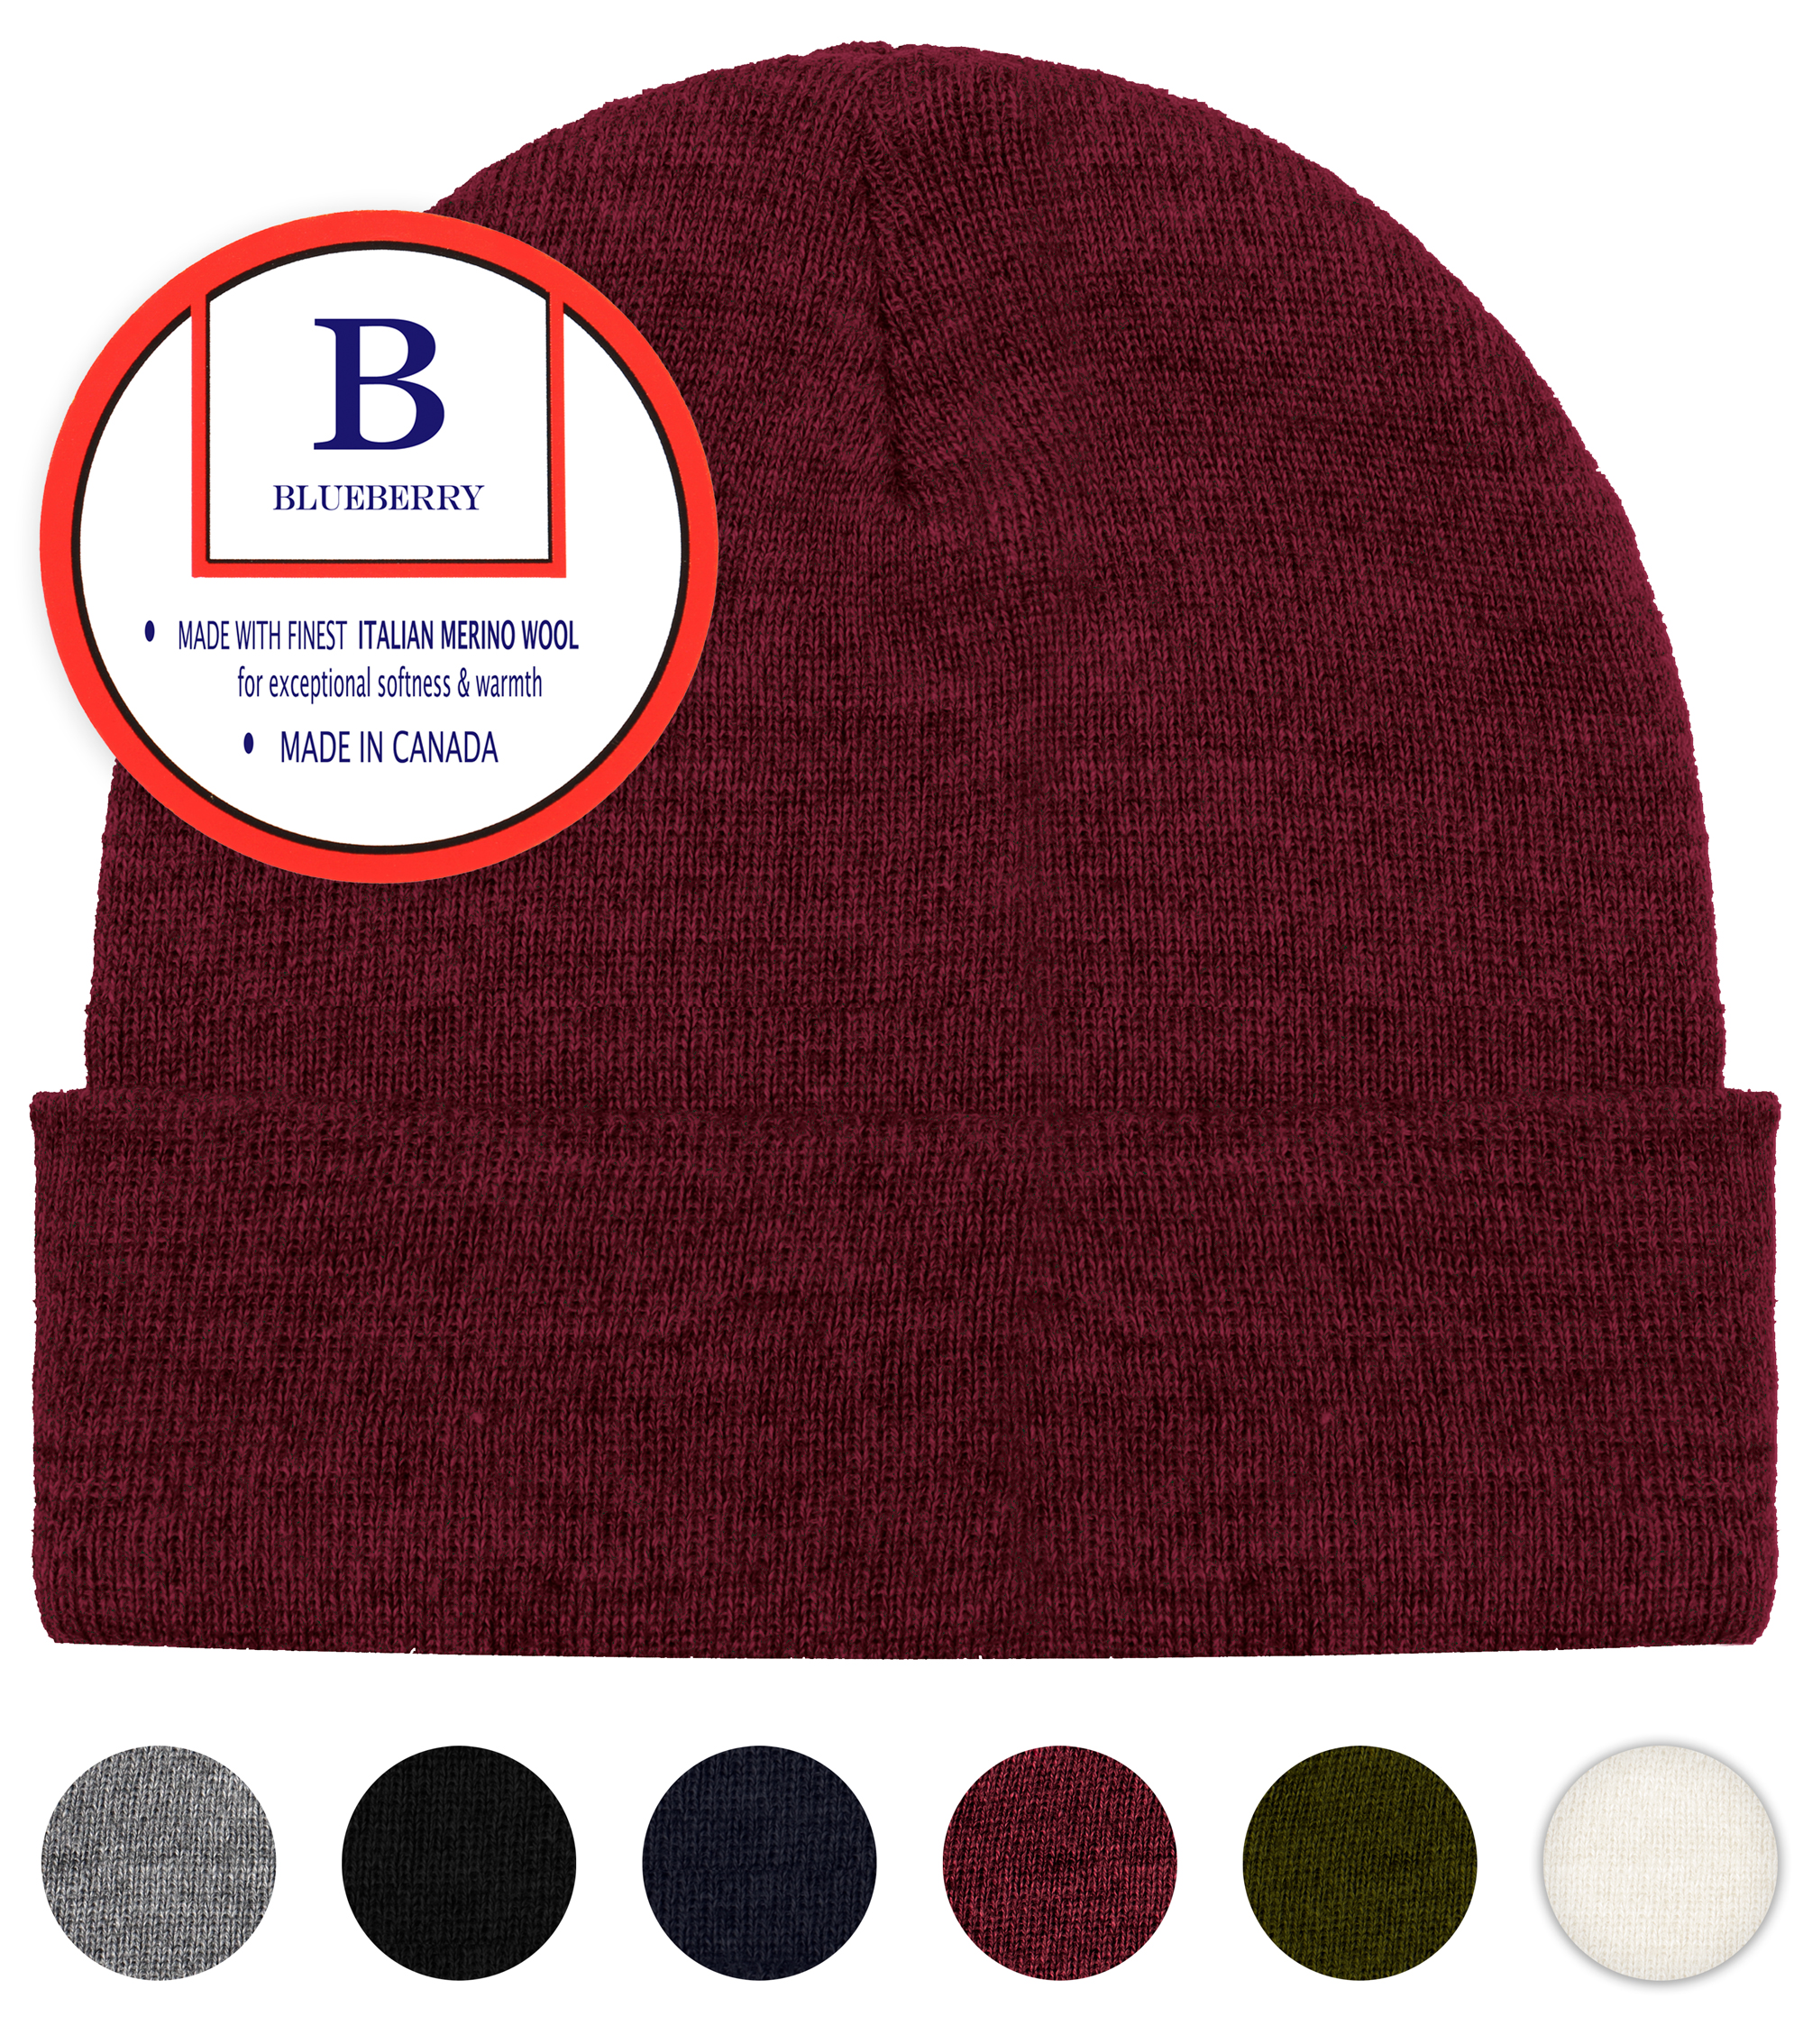 Blueberry Uniforms Burgundy Merino Wool Beanie Hat -Soft Winter and Activewear Watch Cap - image 1 of 6